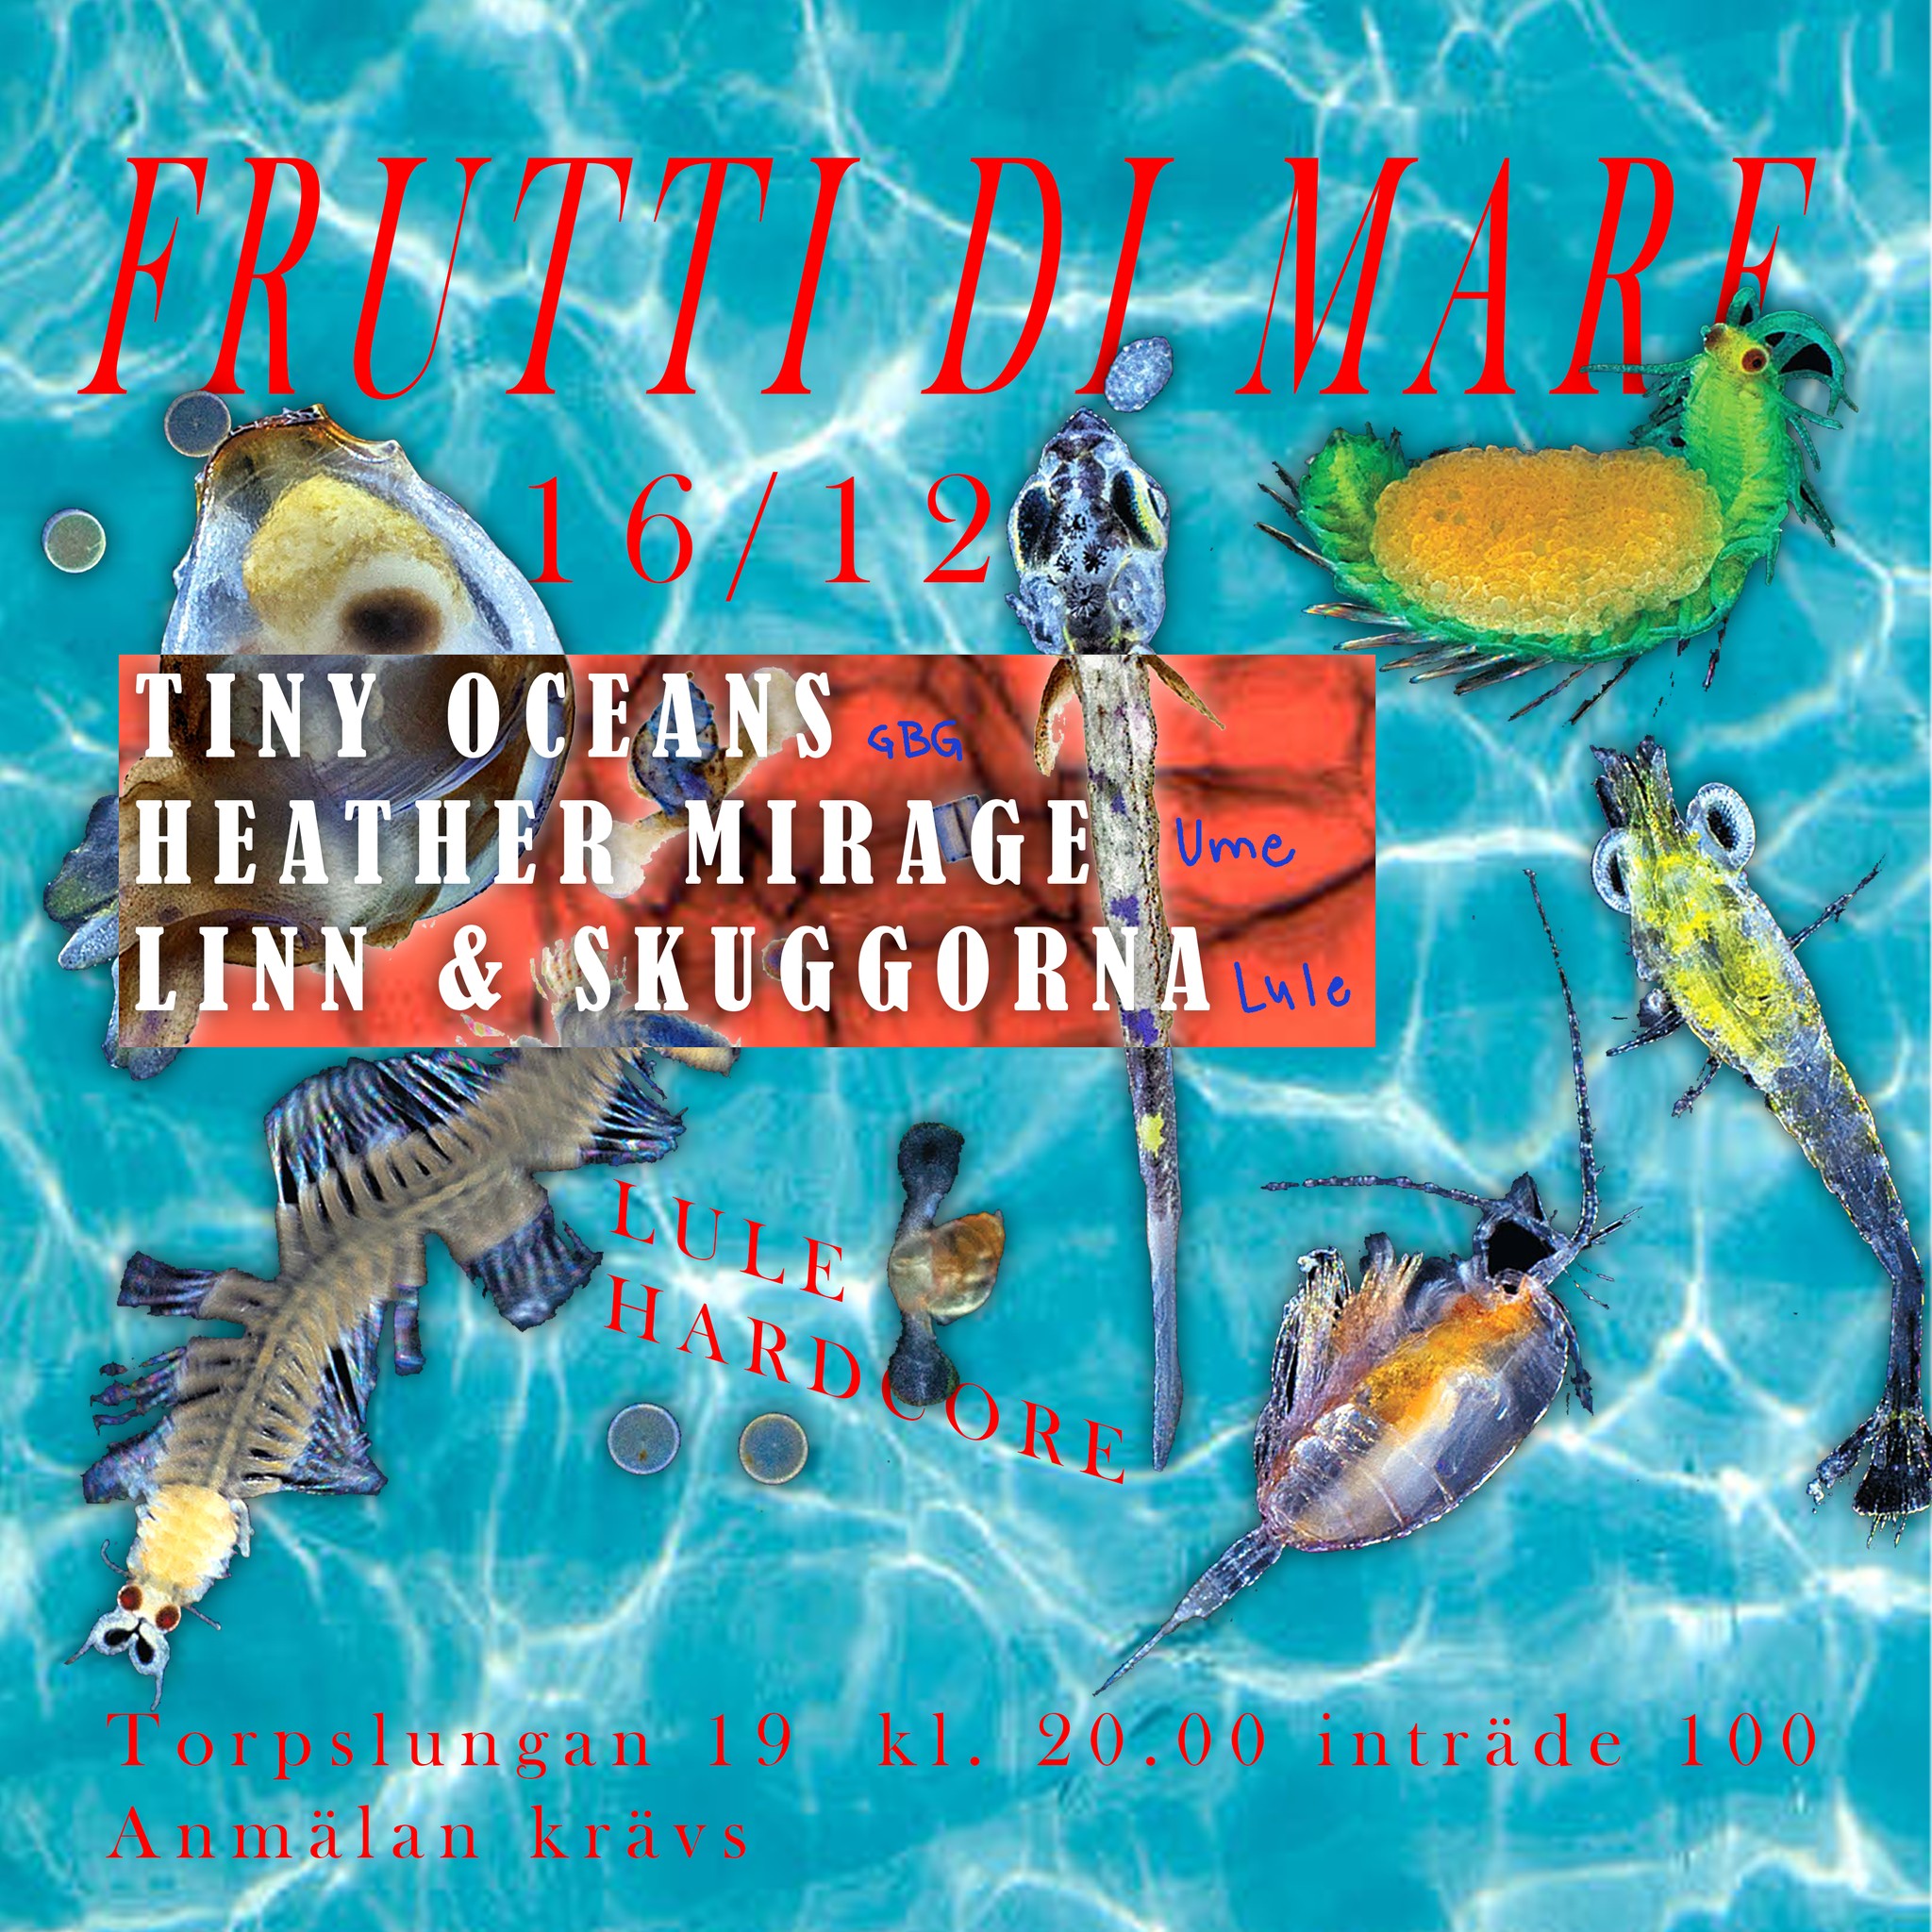 16/12 FRUTTI DI MARE: TINY OCEANS (MALMÖ), HEATHER MIRAGE (UME), LINN & SKUGGORNA (LULE)